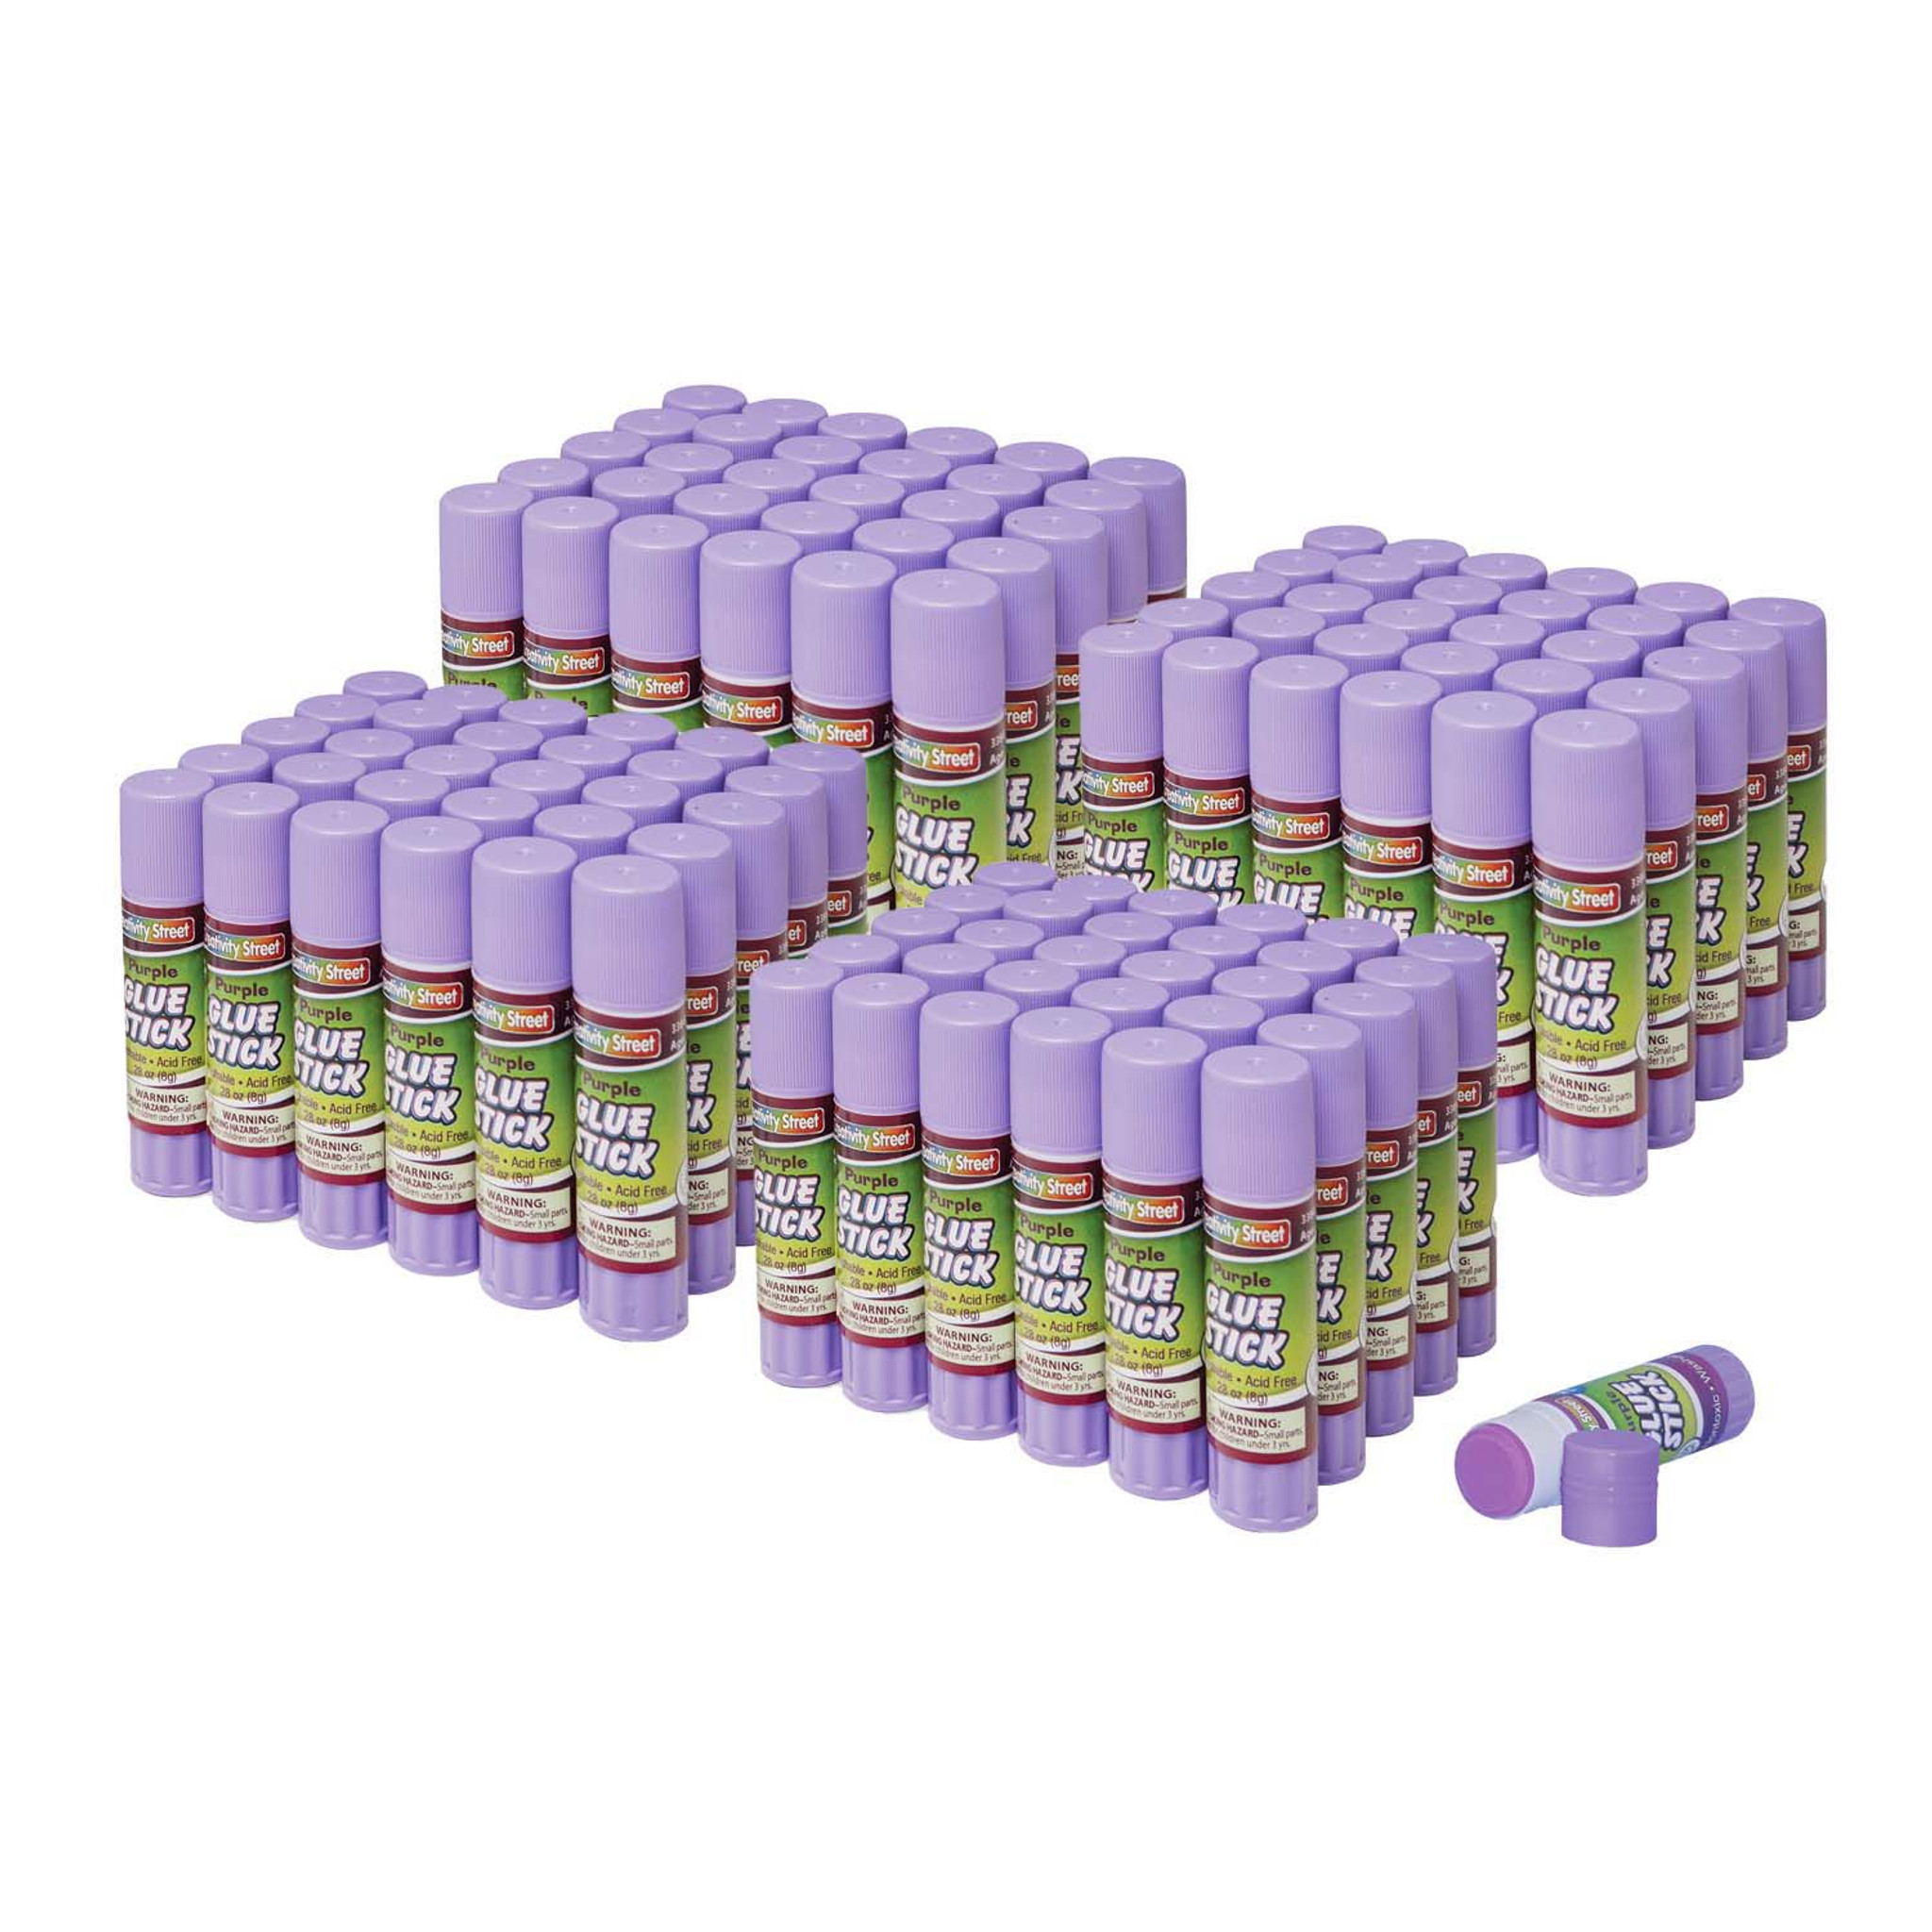 Glue Sticks, Purple, 0.28 oz., 30 Count, 1 - Foods Co.